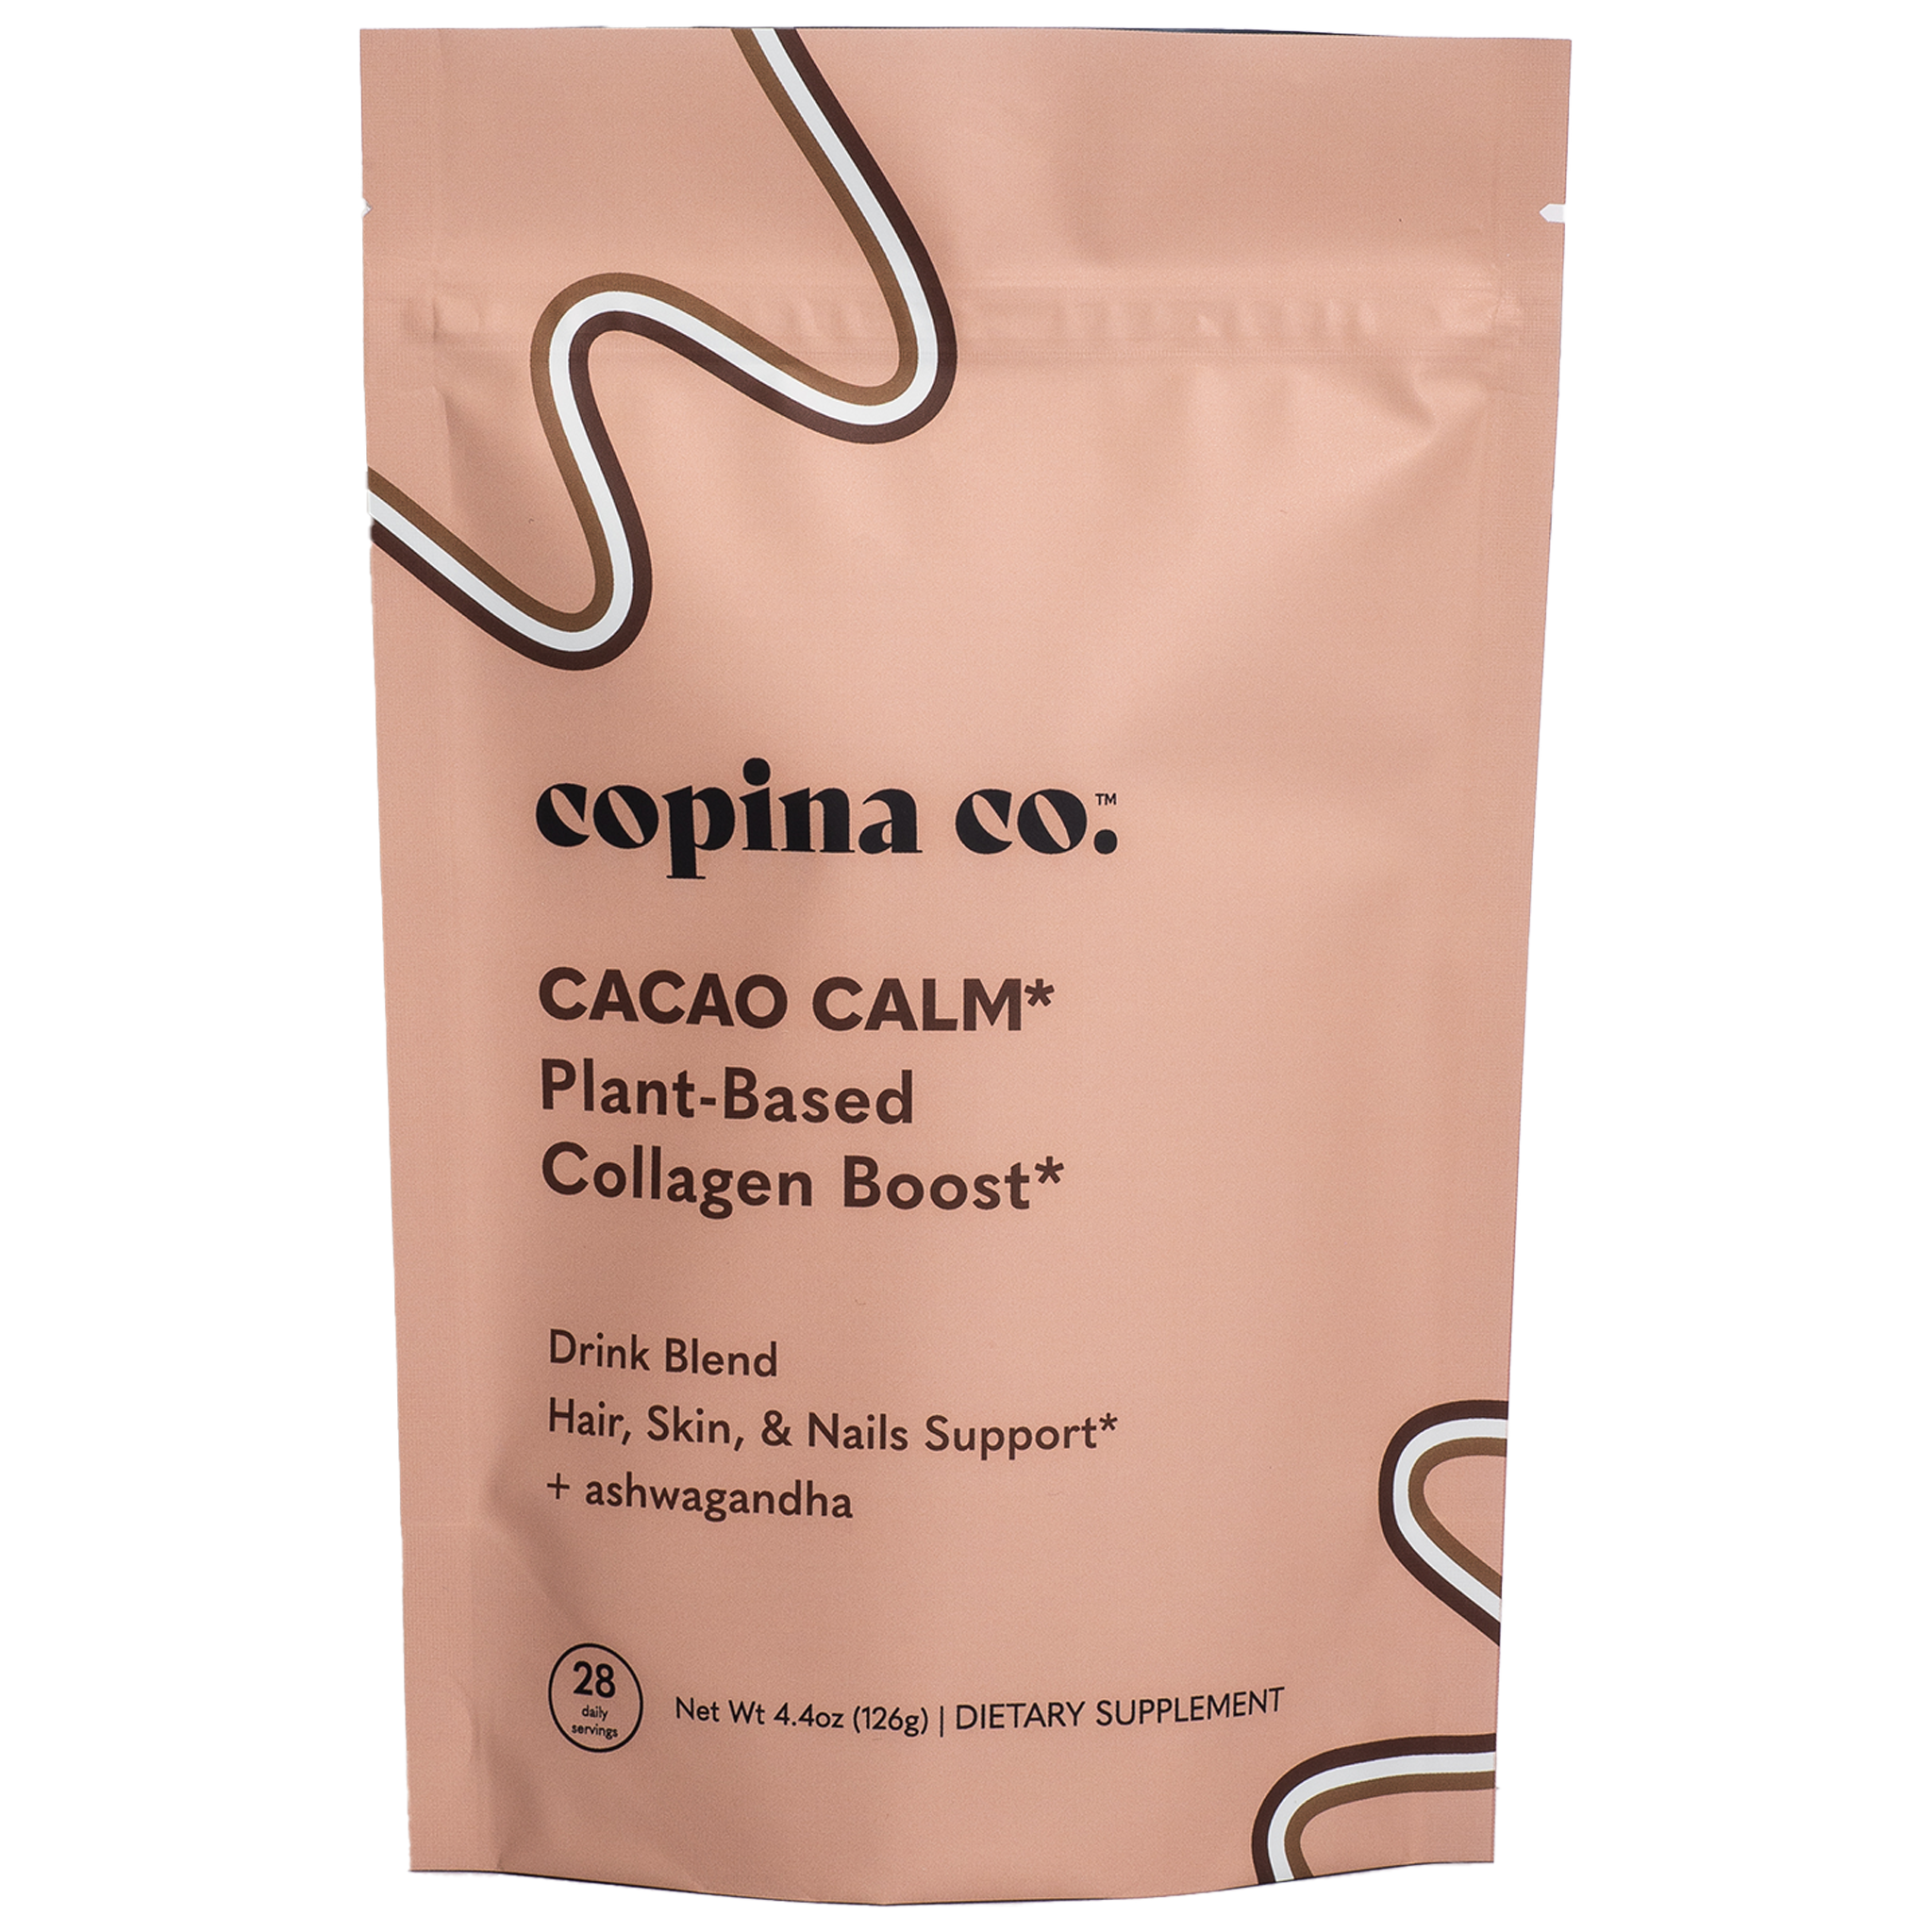 Cacao Calm Plant-Based Collagen Boost Drink Blend + Ashwagandha